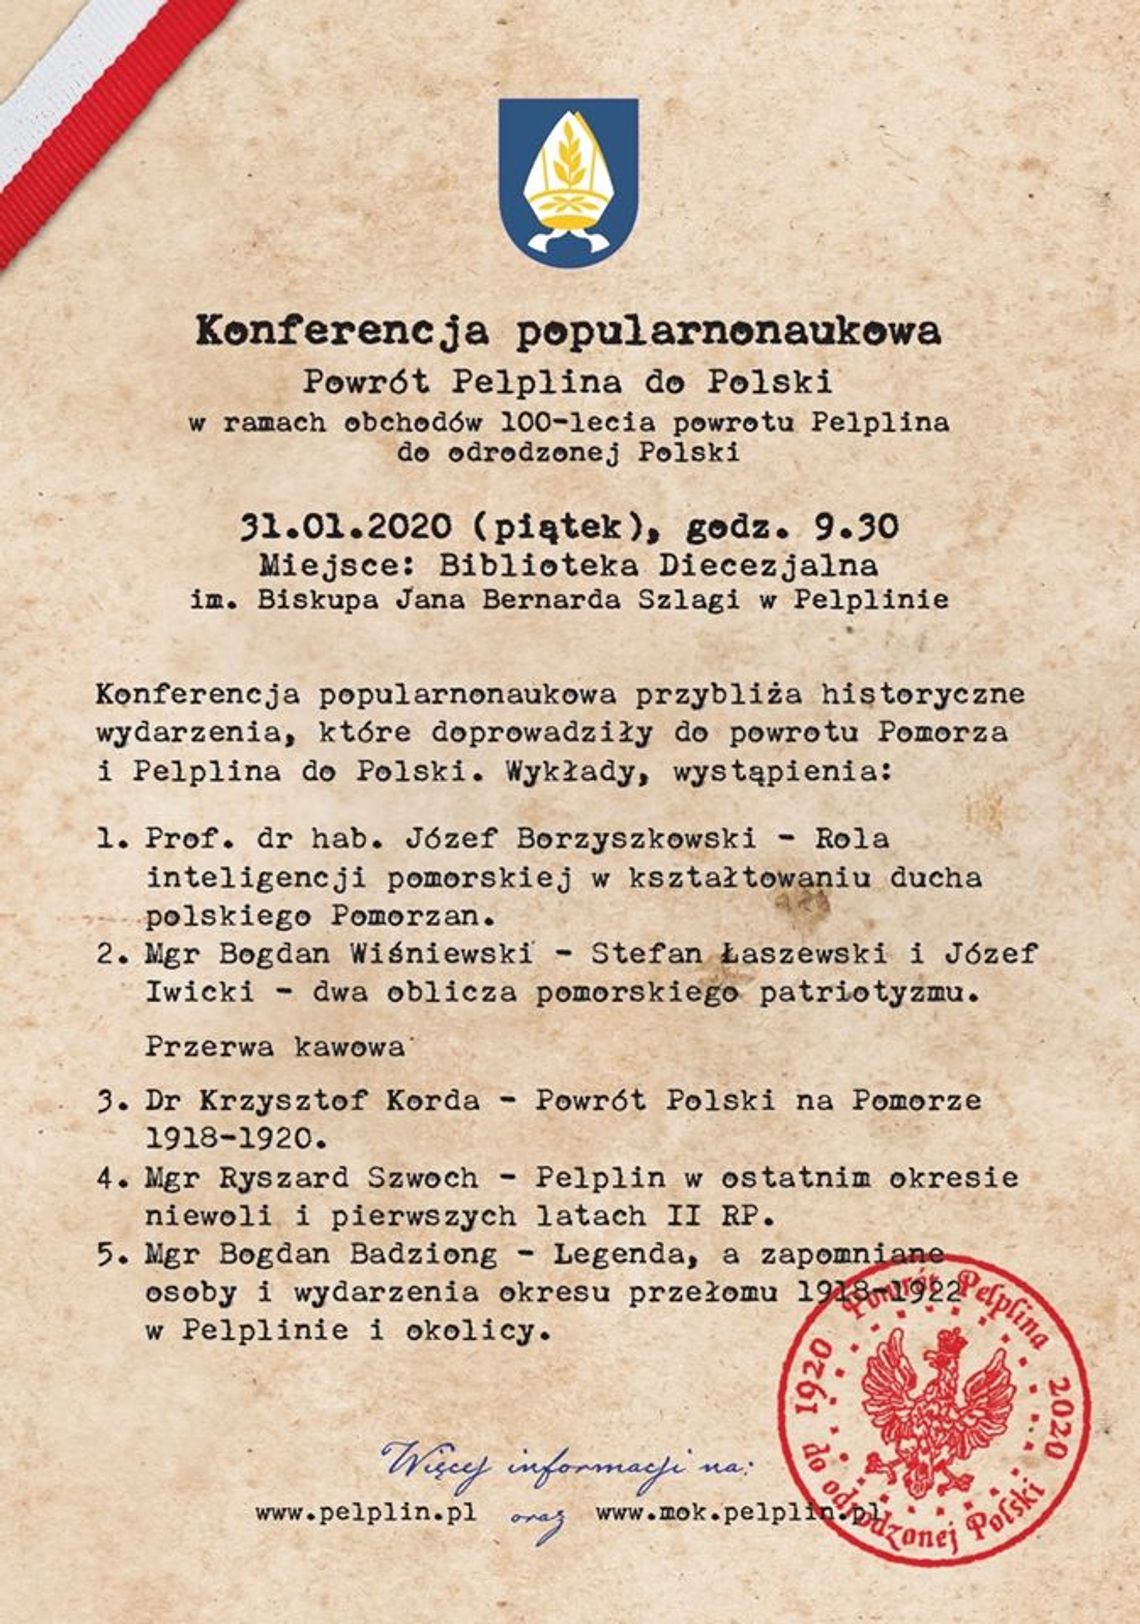 Konferencja popularnonaukowa - powrót Pelplina do Polski